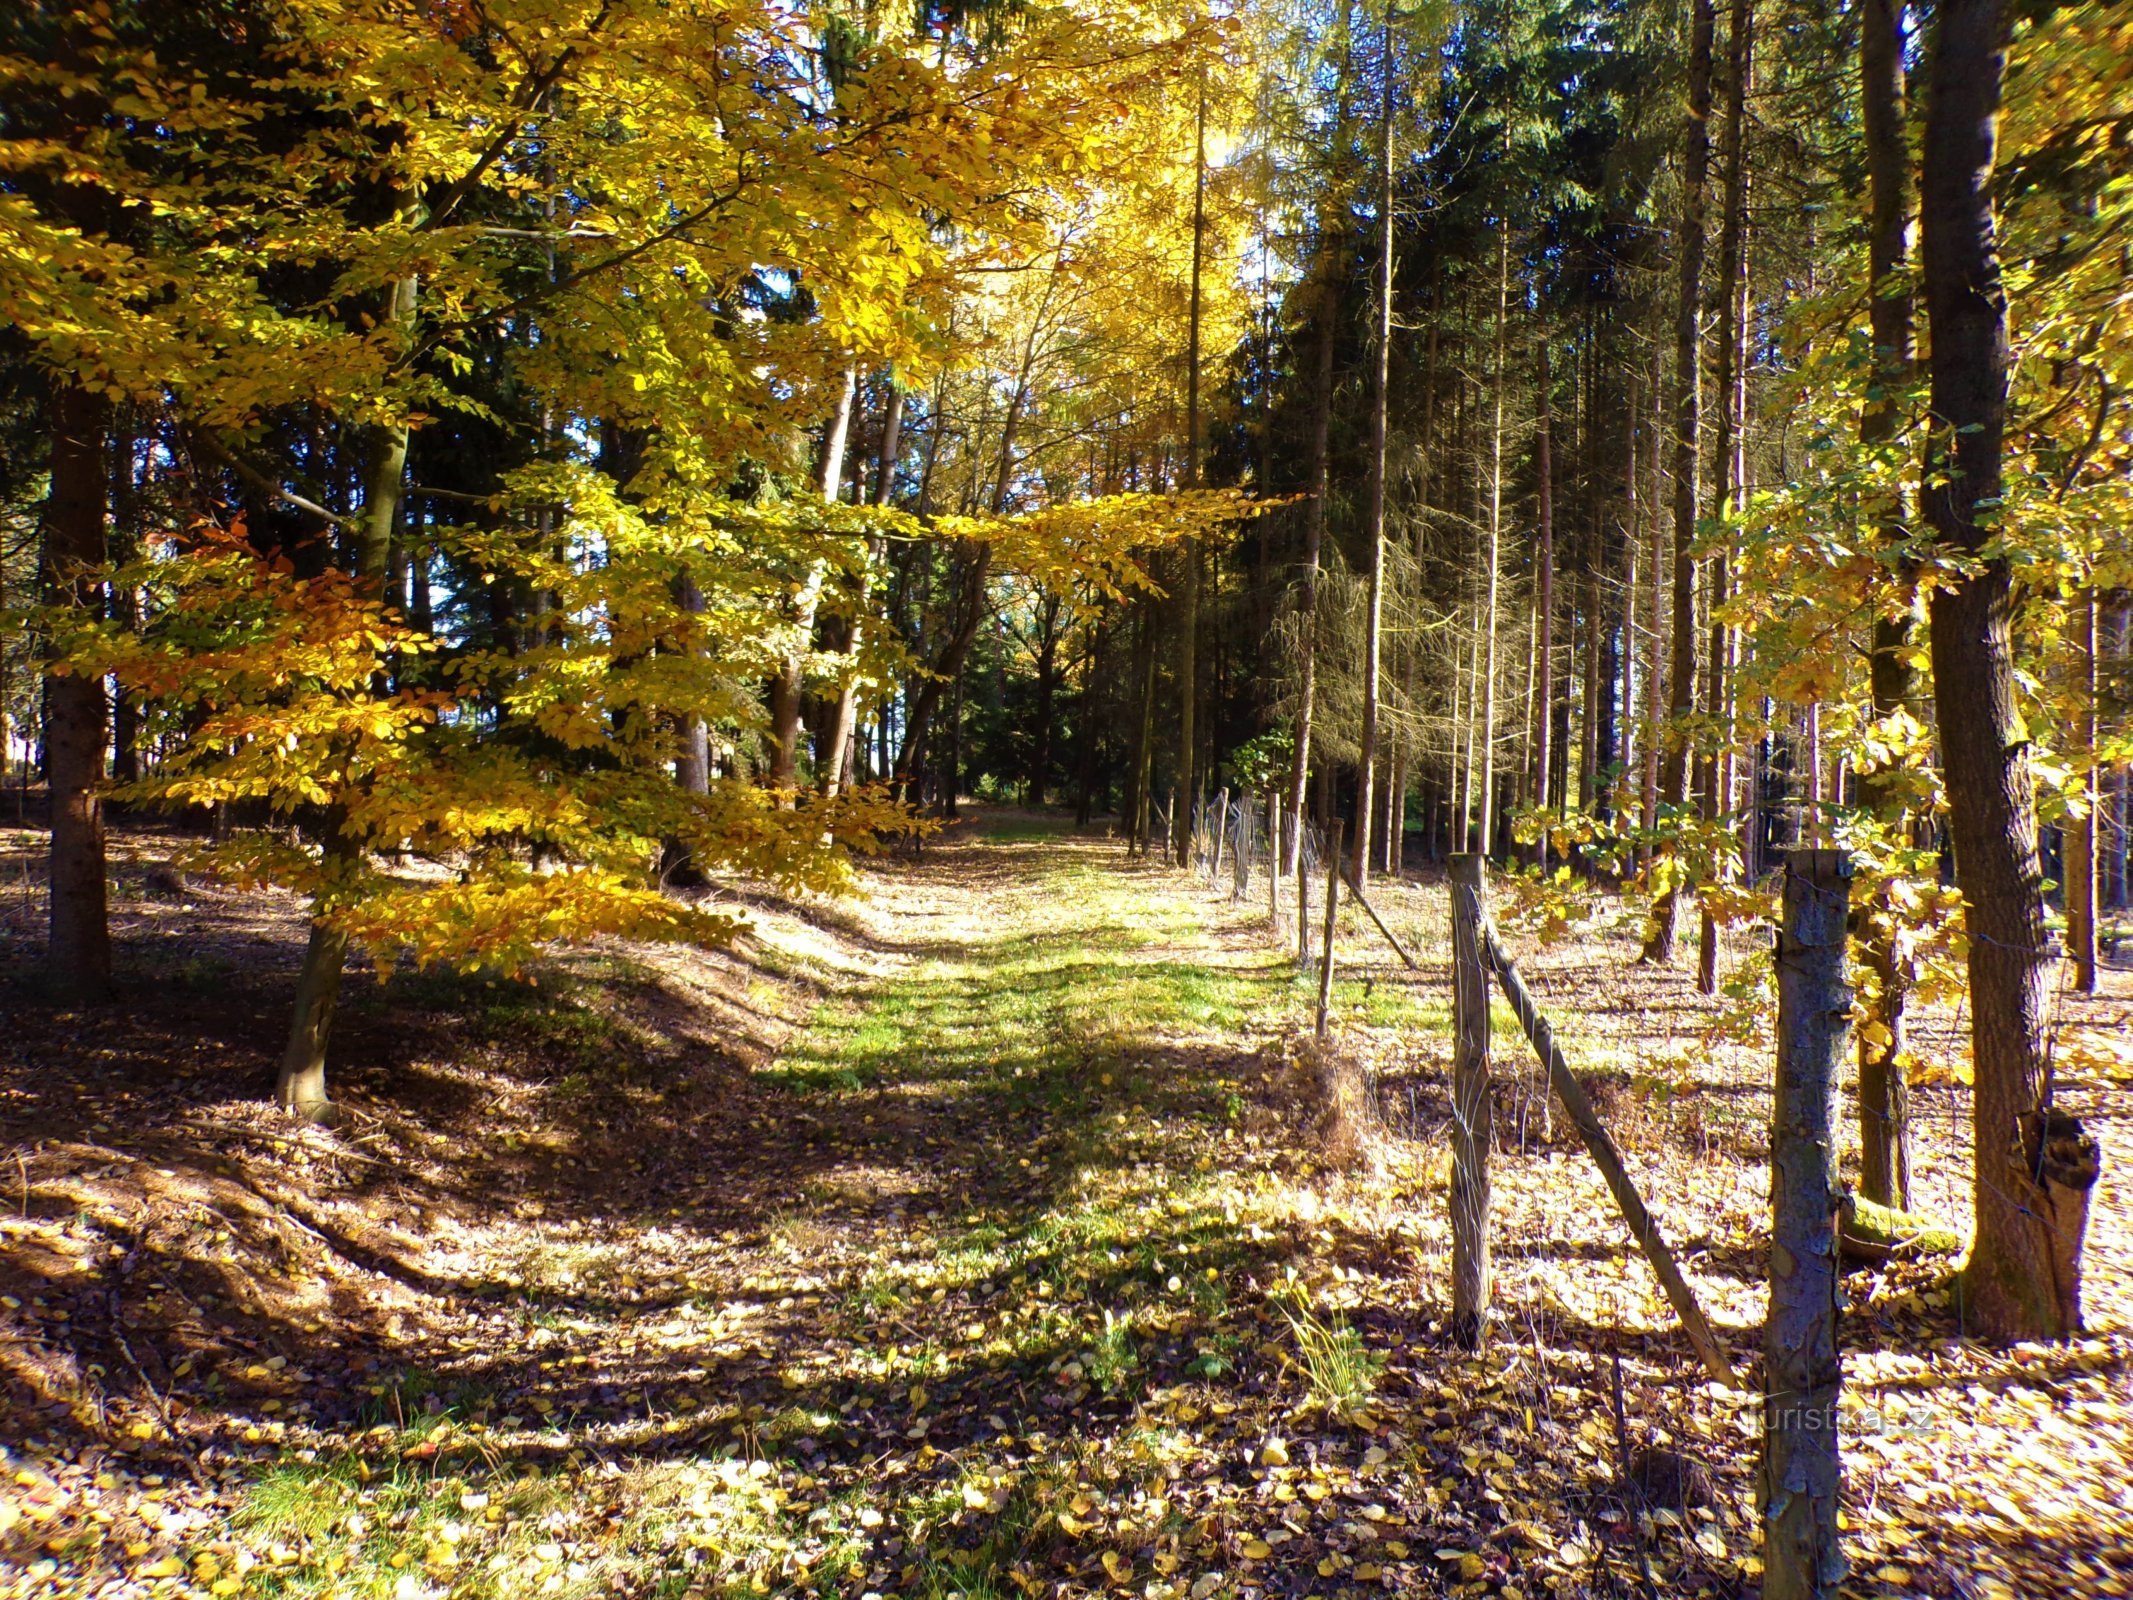 Camino a la localidad de Mečovská (Křižanov, 28.10.2021/XNUMX/XNUMX)